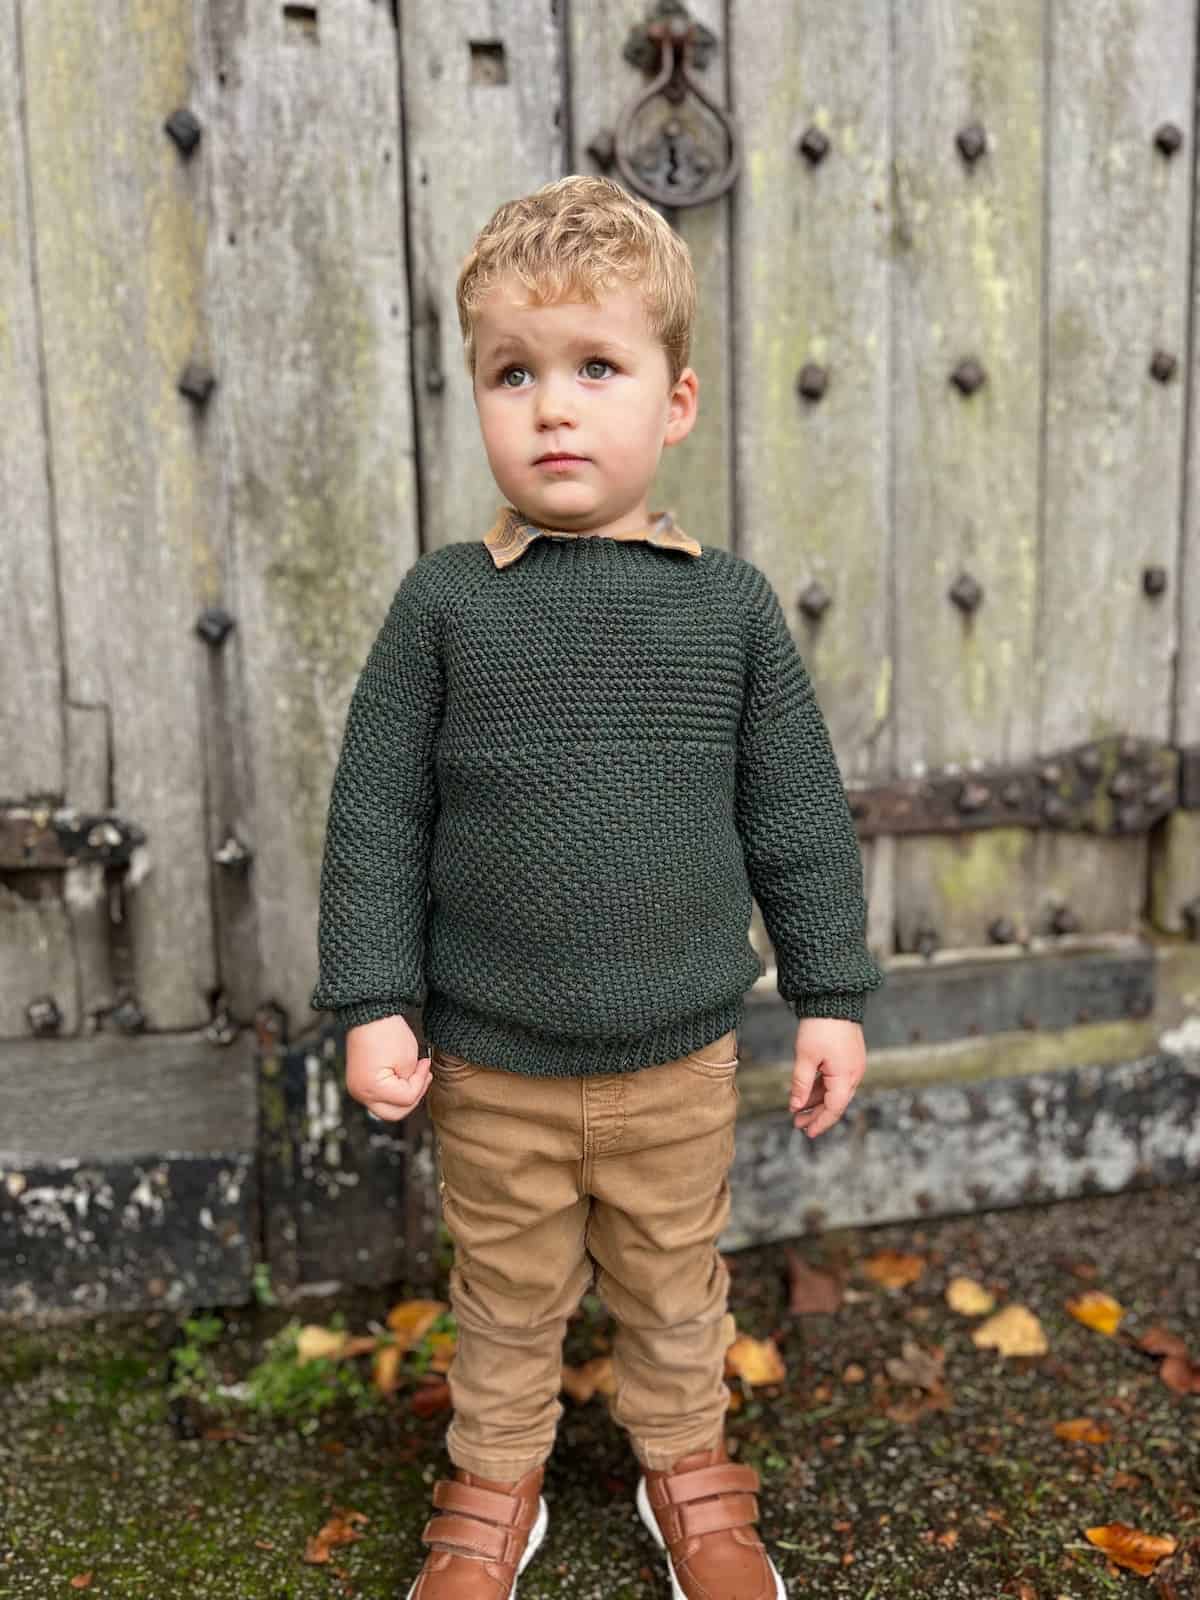 Toddler wearing green raglan crochet sweater.